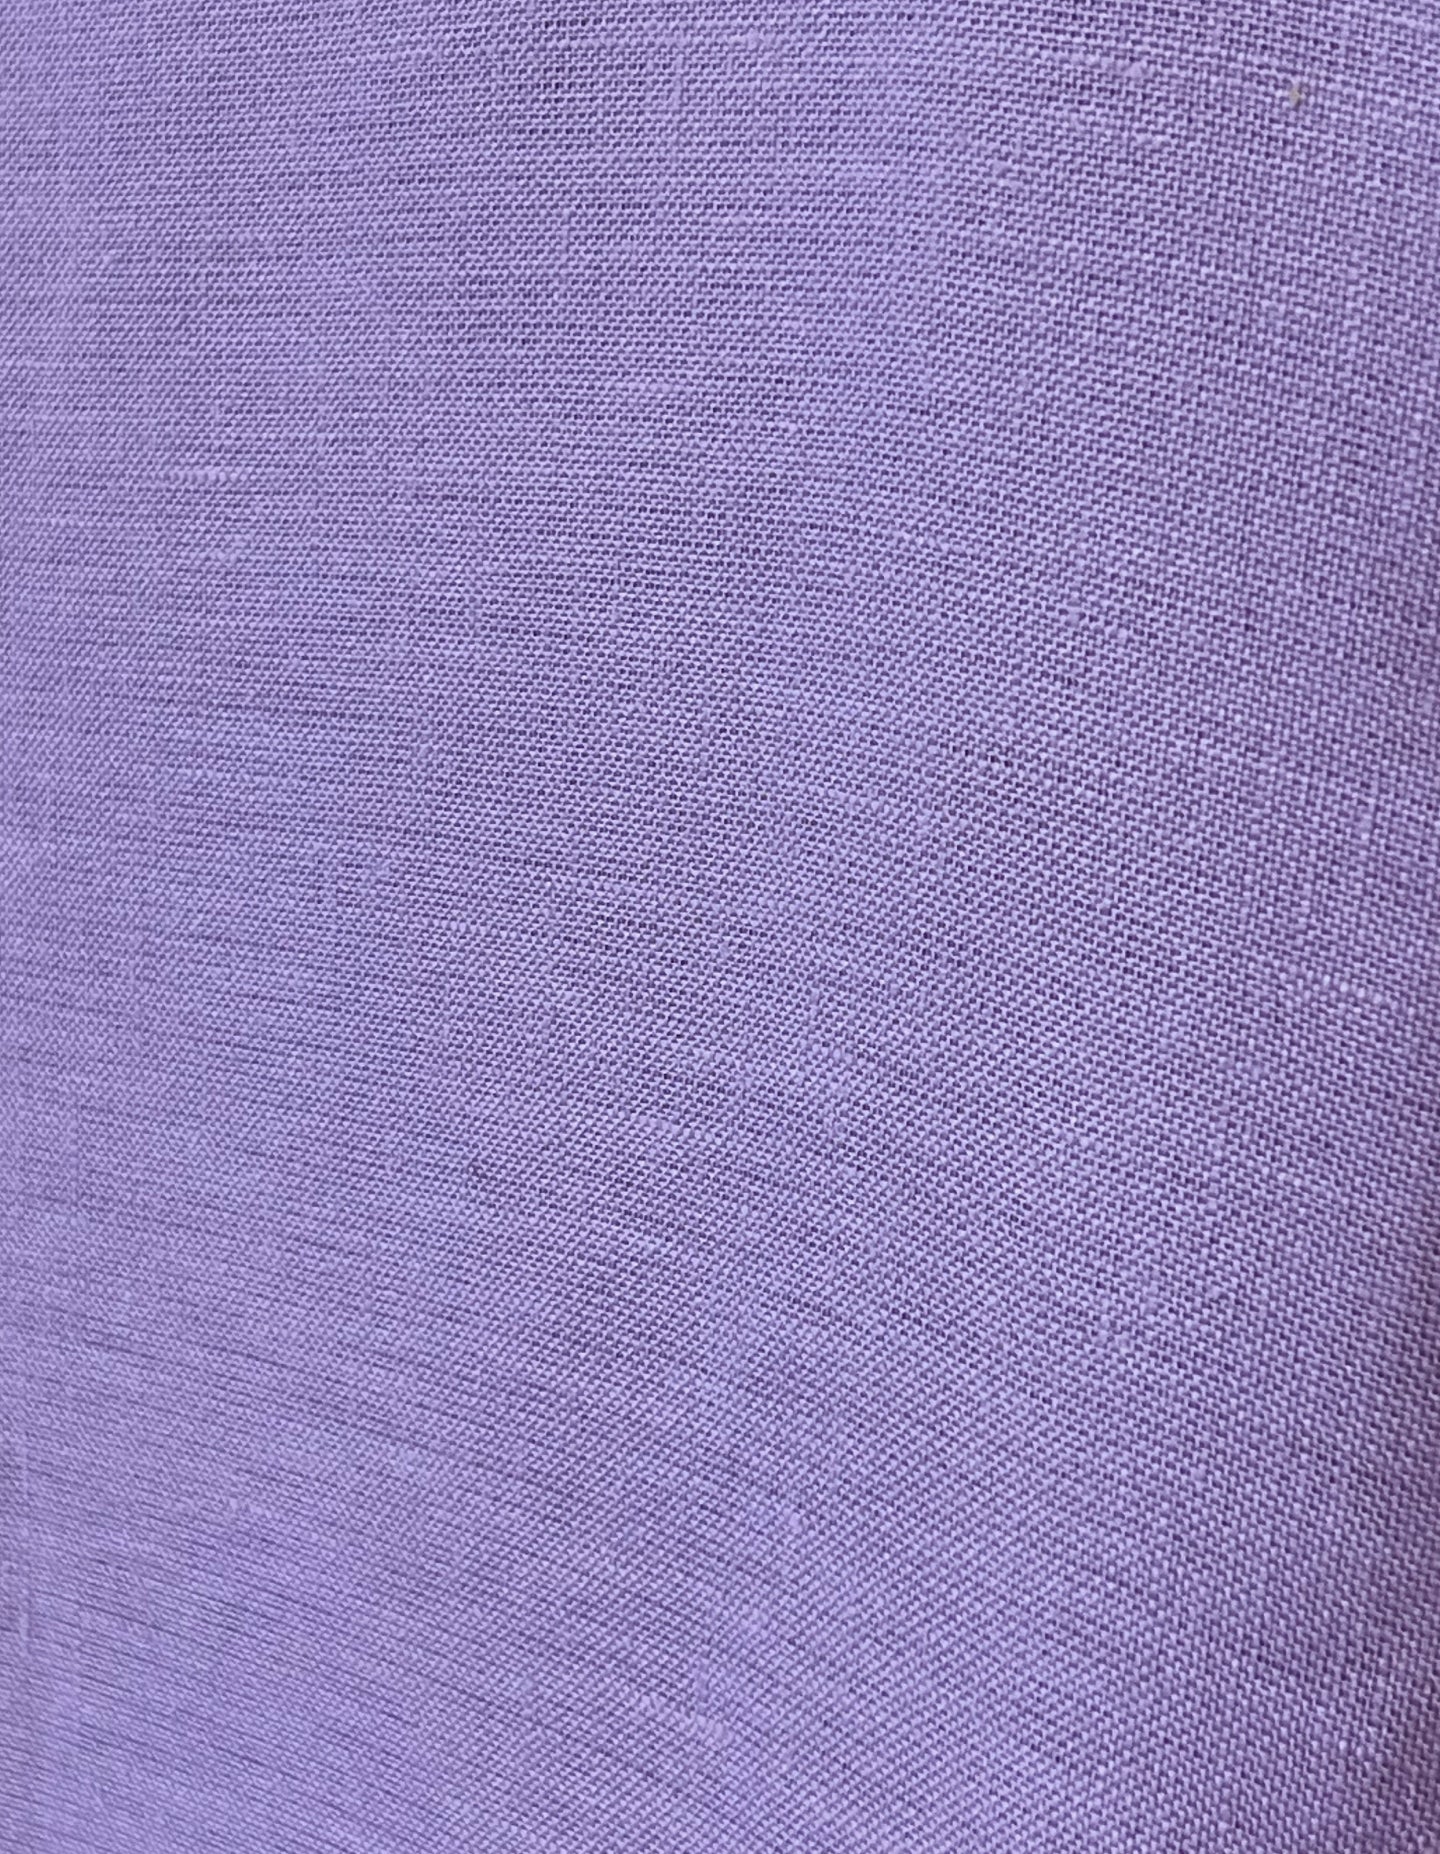 Sample Fabric: Lavender Linen